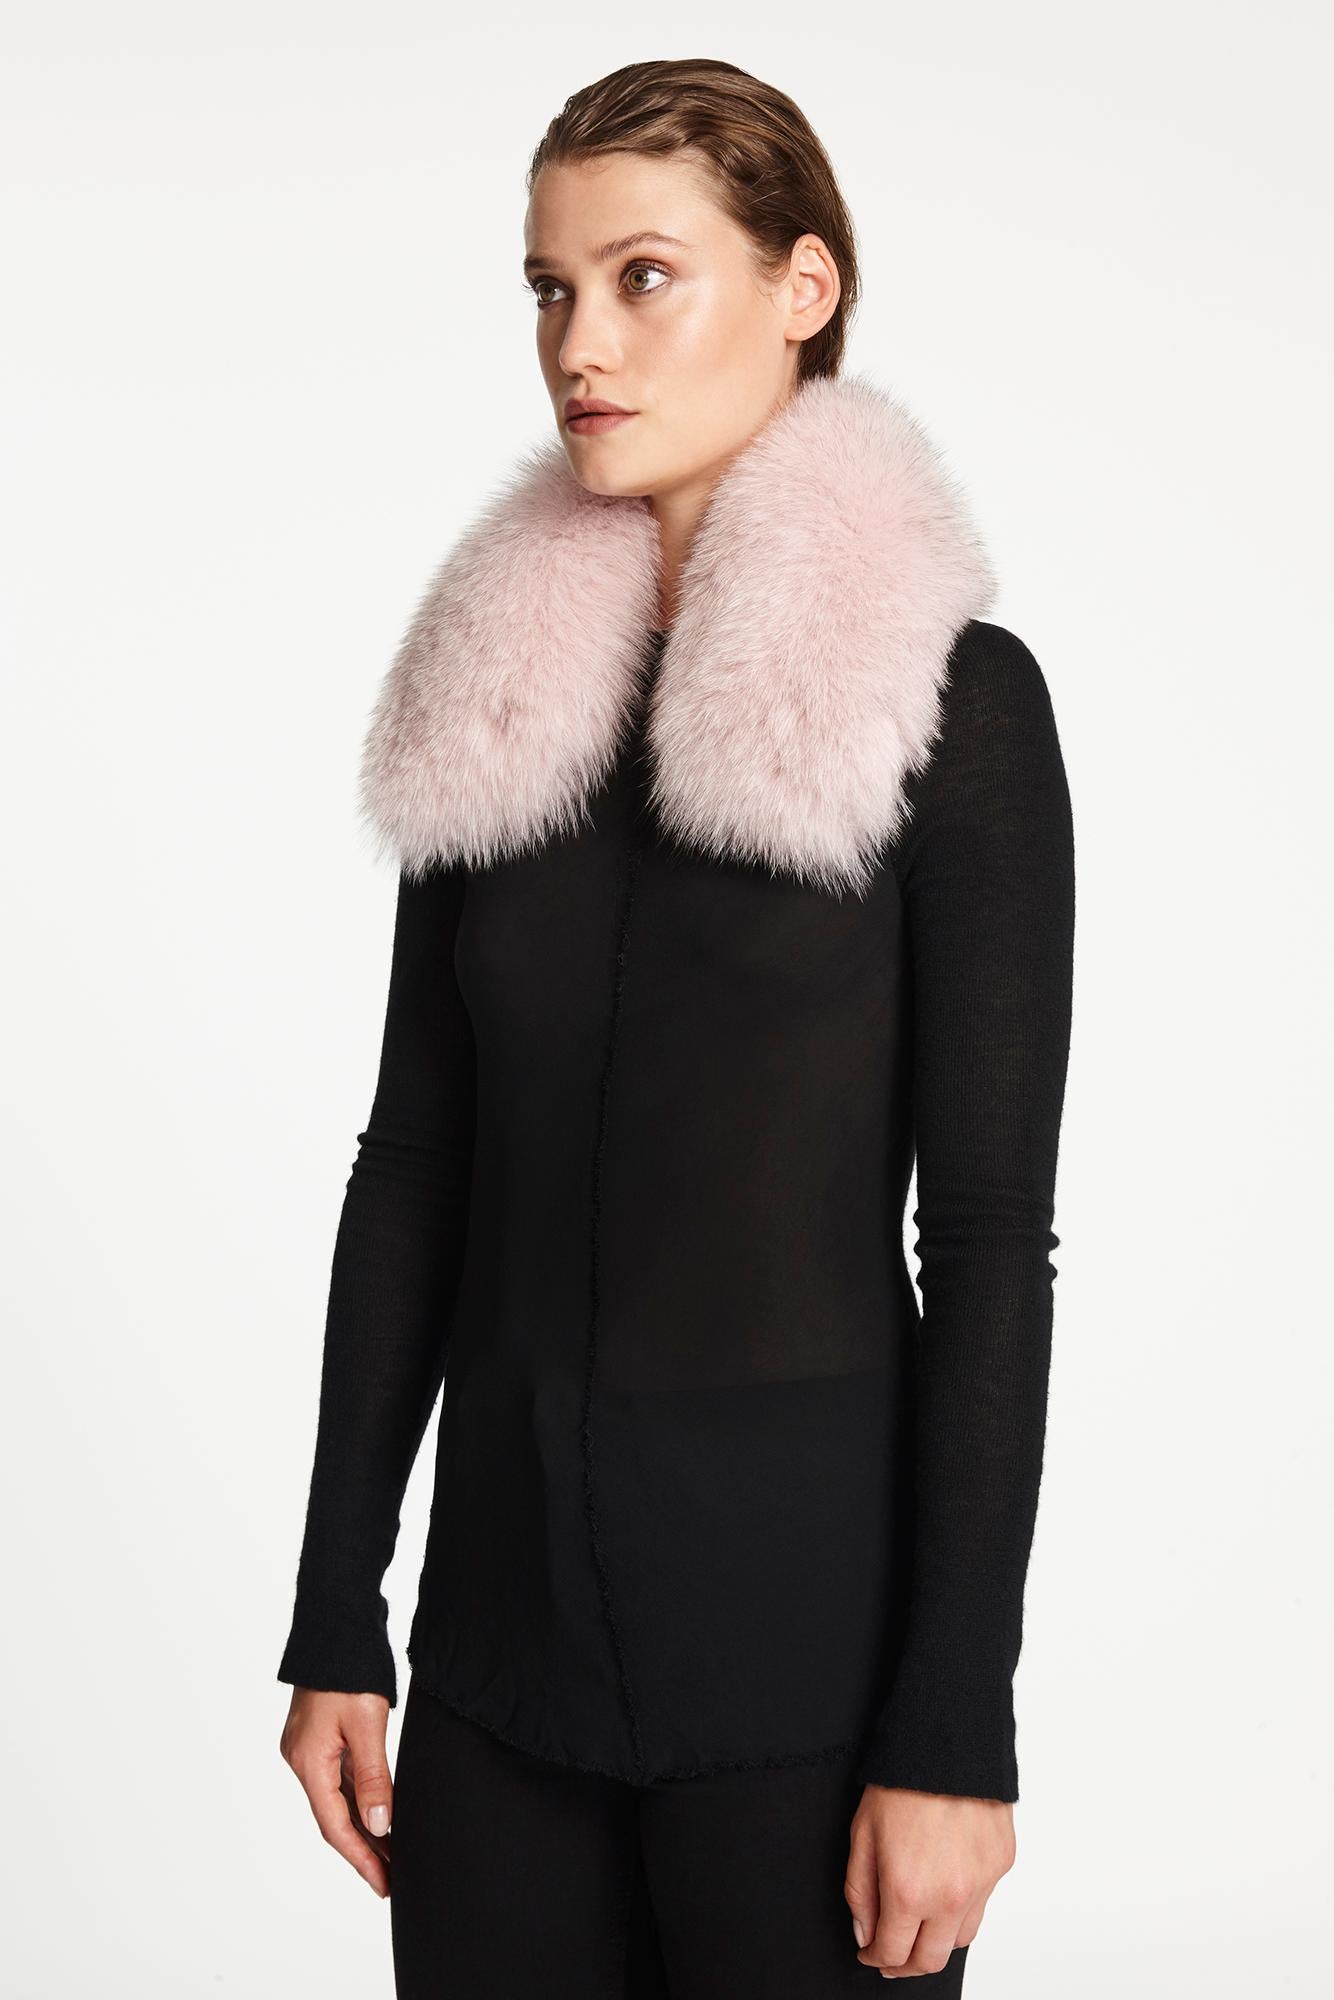 Verheyen London Peter Pan Collar in Pastel Rose Pink Fox Fur - Brand New  1